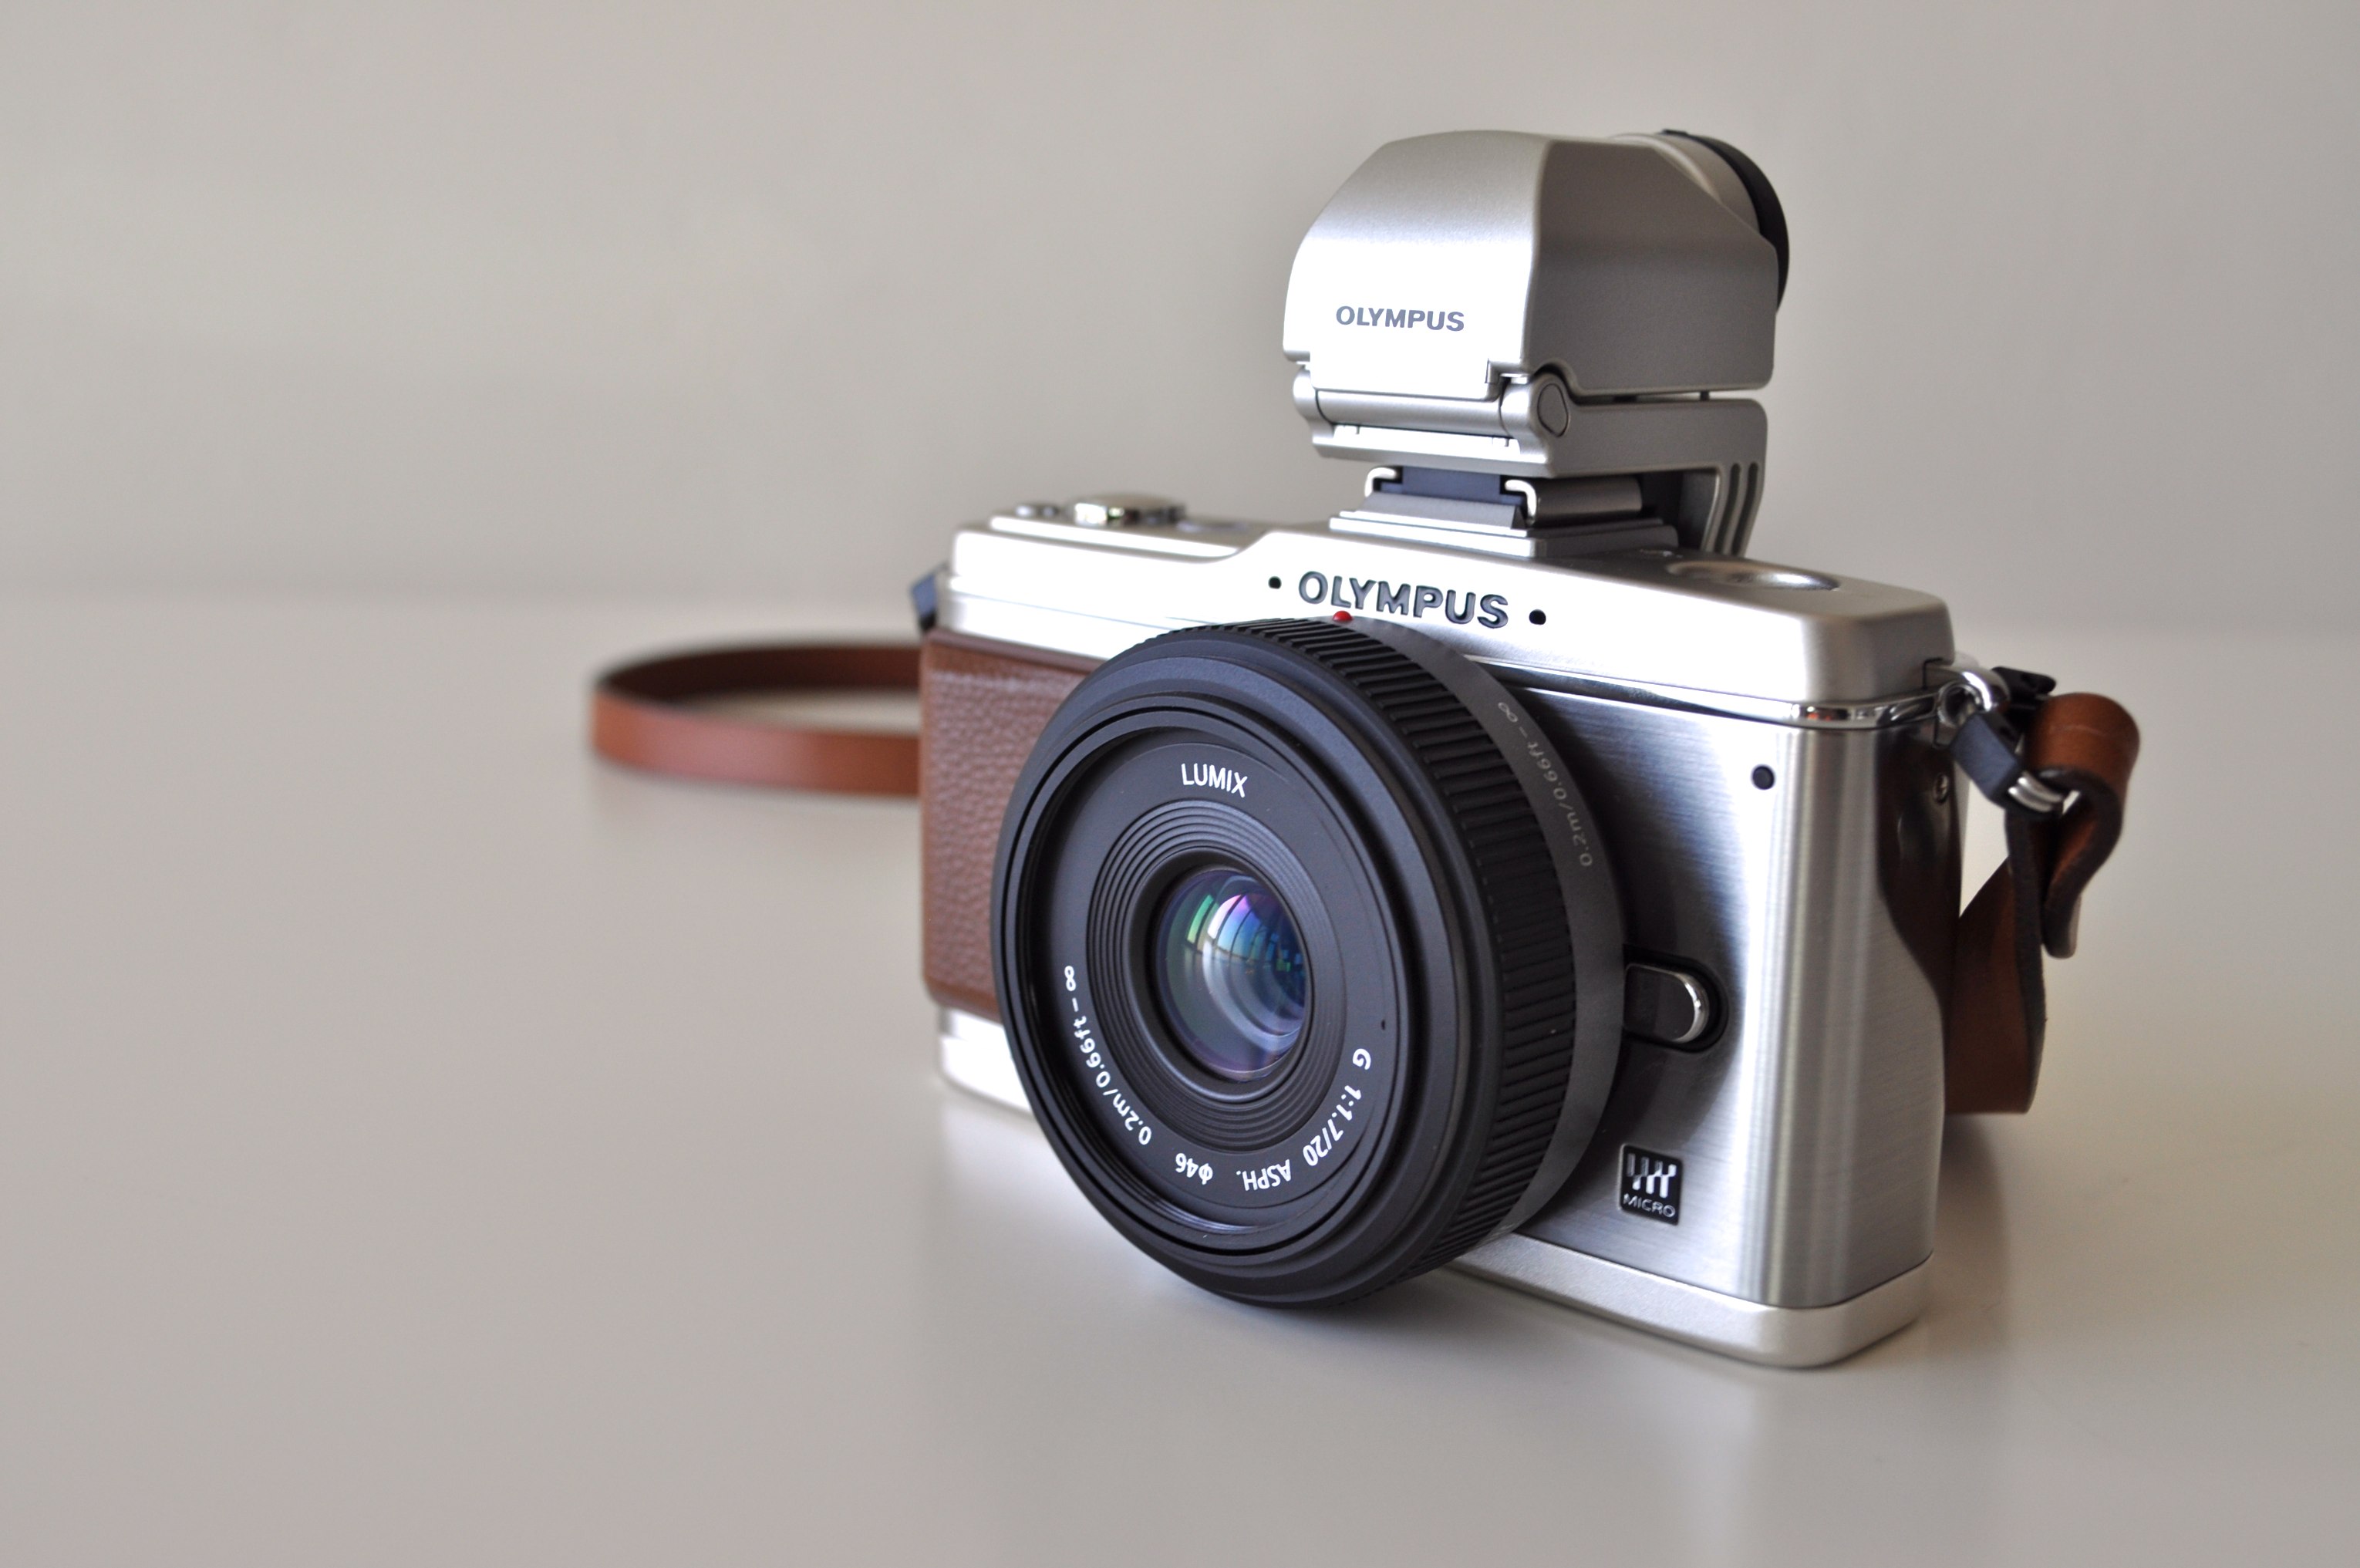 File:Olympus E-P2 with Panasonic G 20mm F1.7 ASPH Pancake Lens.jpg - Wikimedia Commons